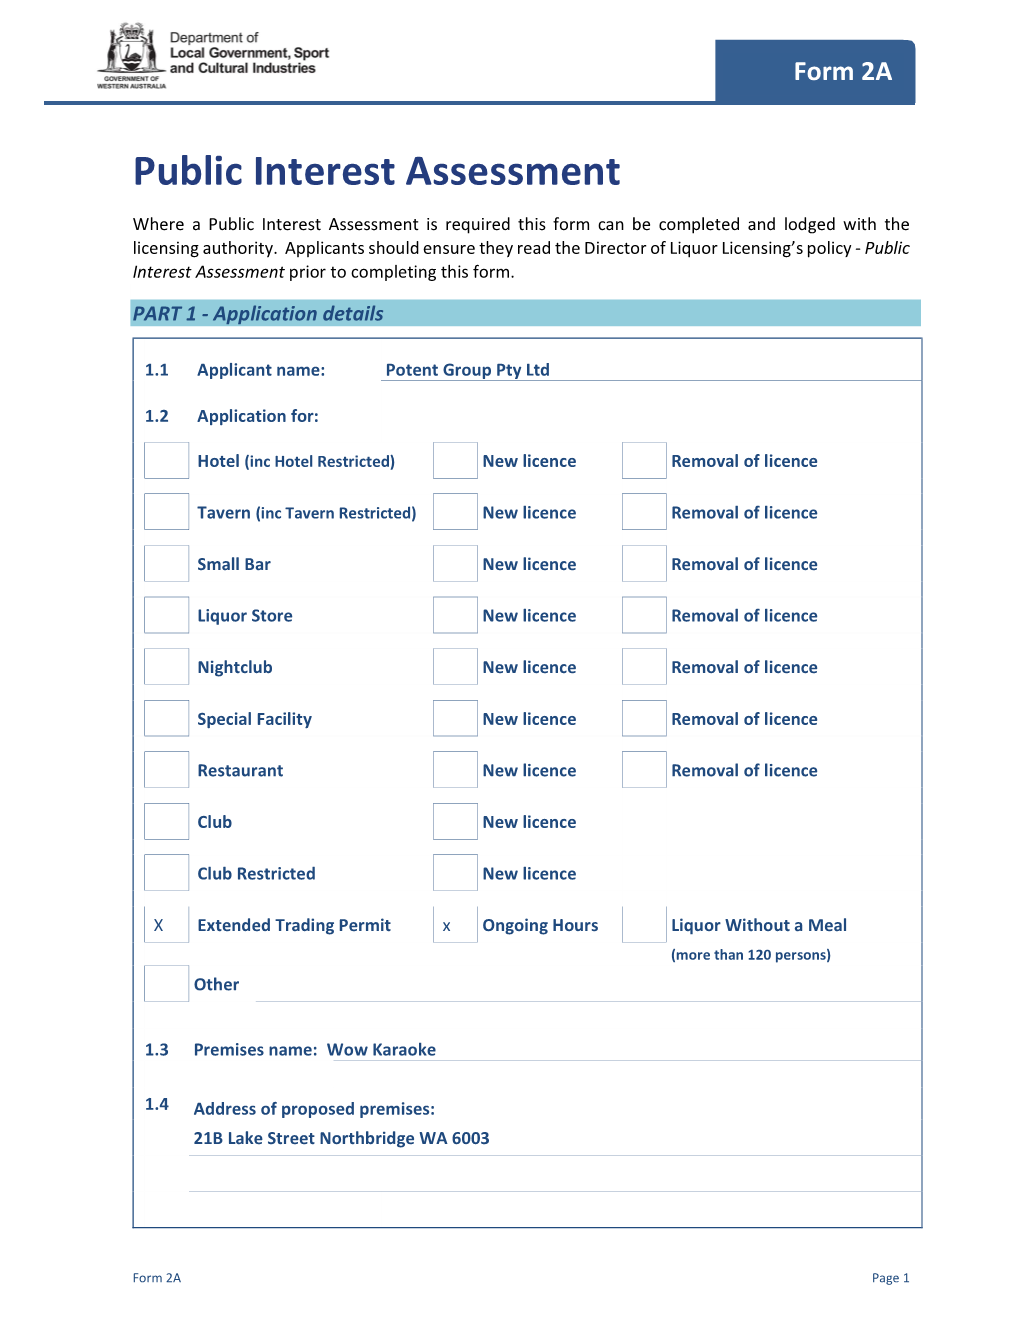 Public Interest Assessment